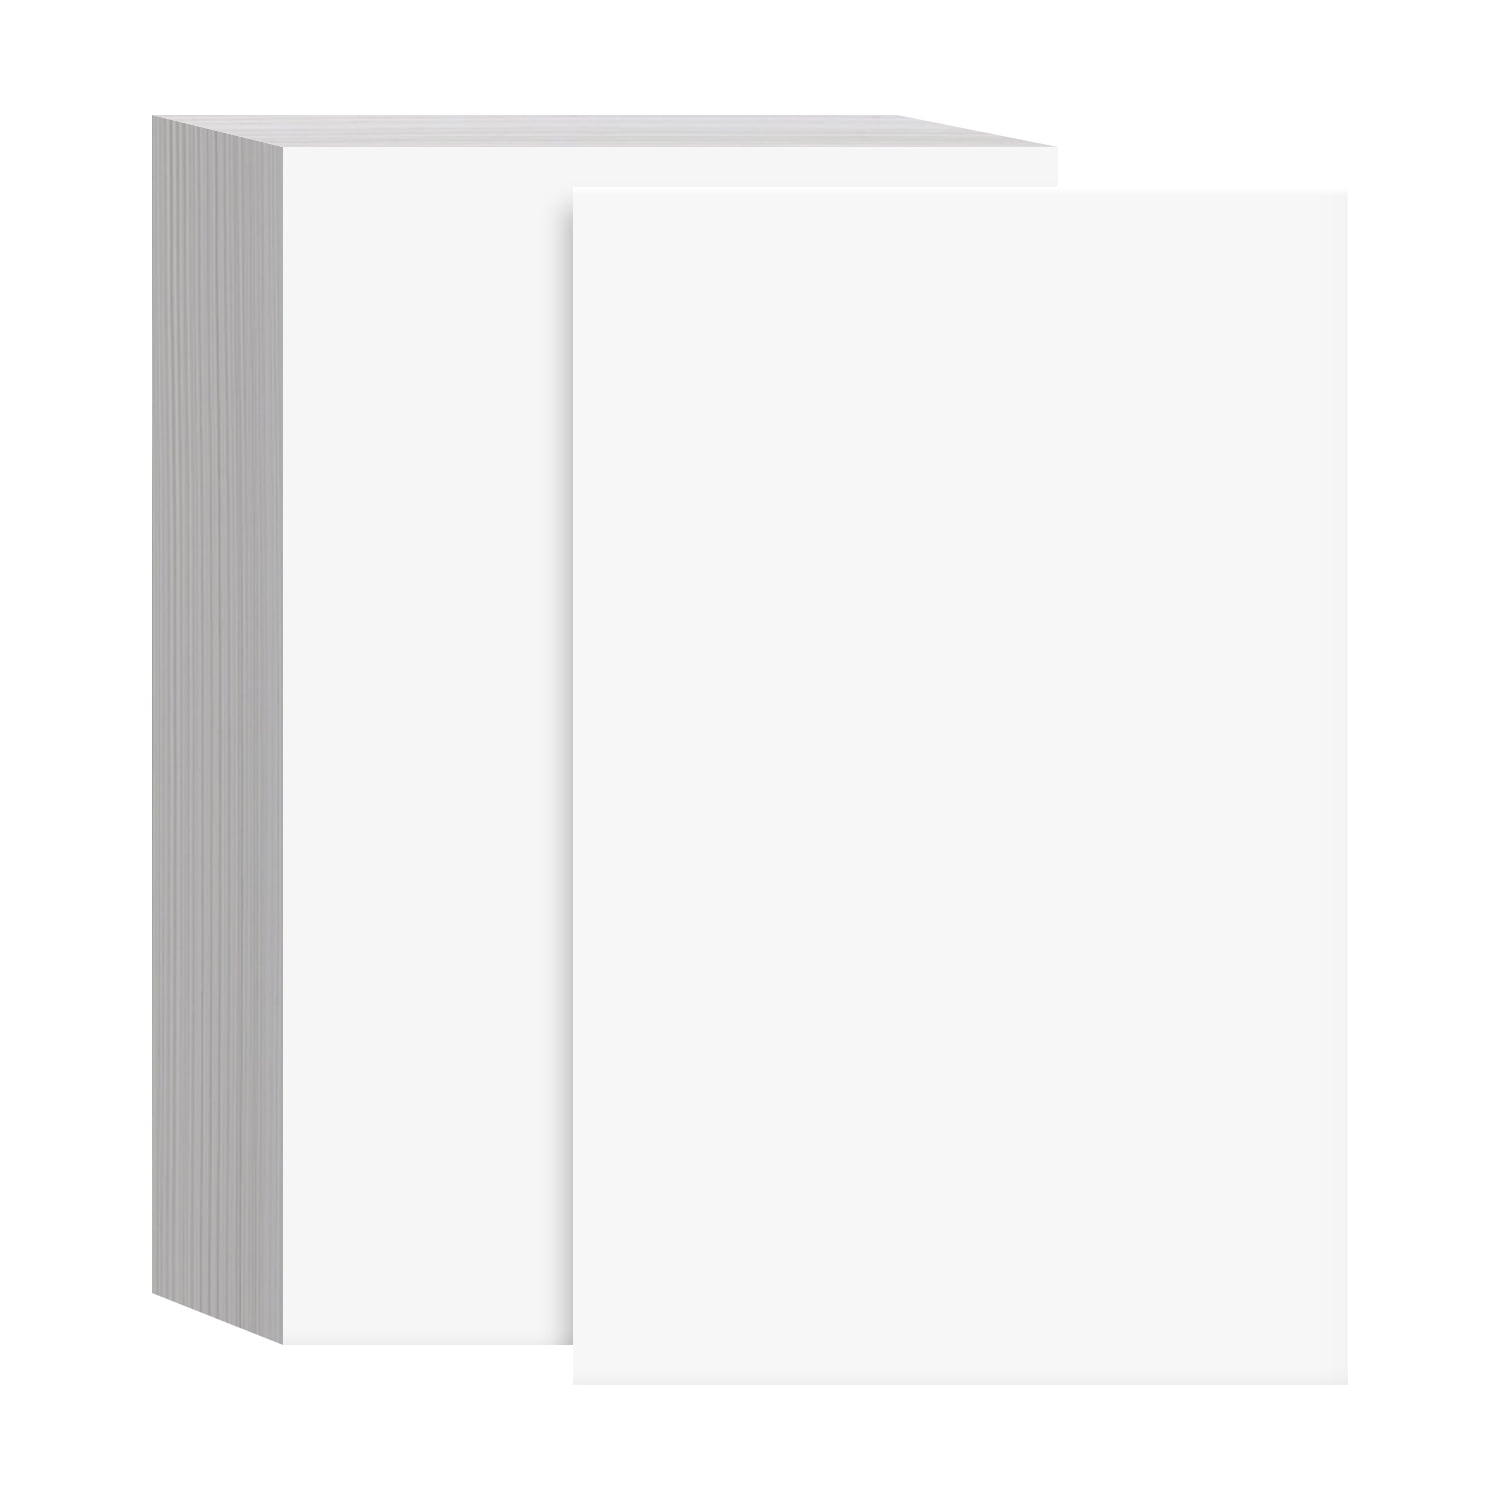 Superfine Soft White Card Stock 8.5 x 11 Bulk Pack